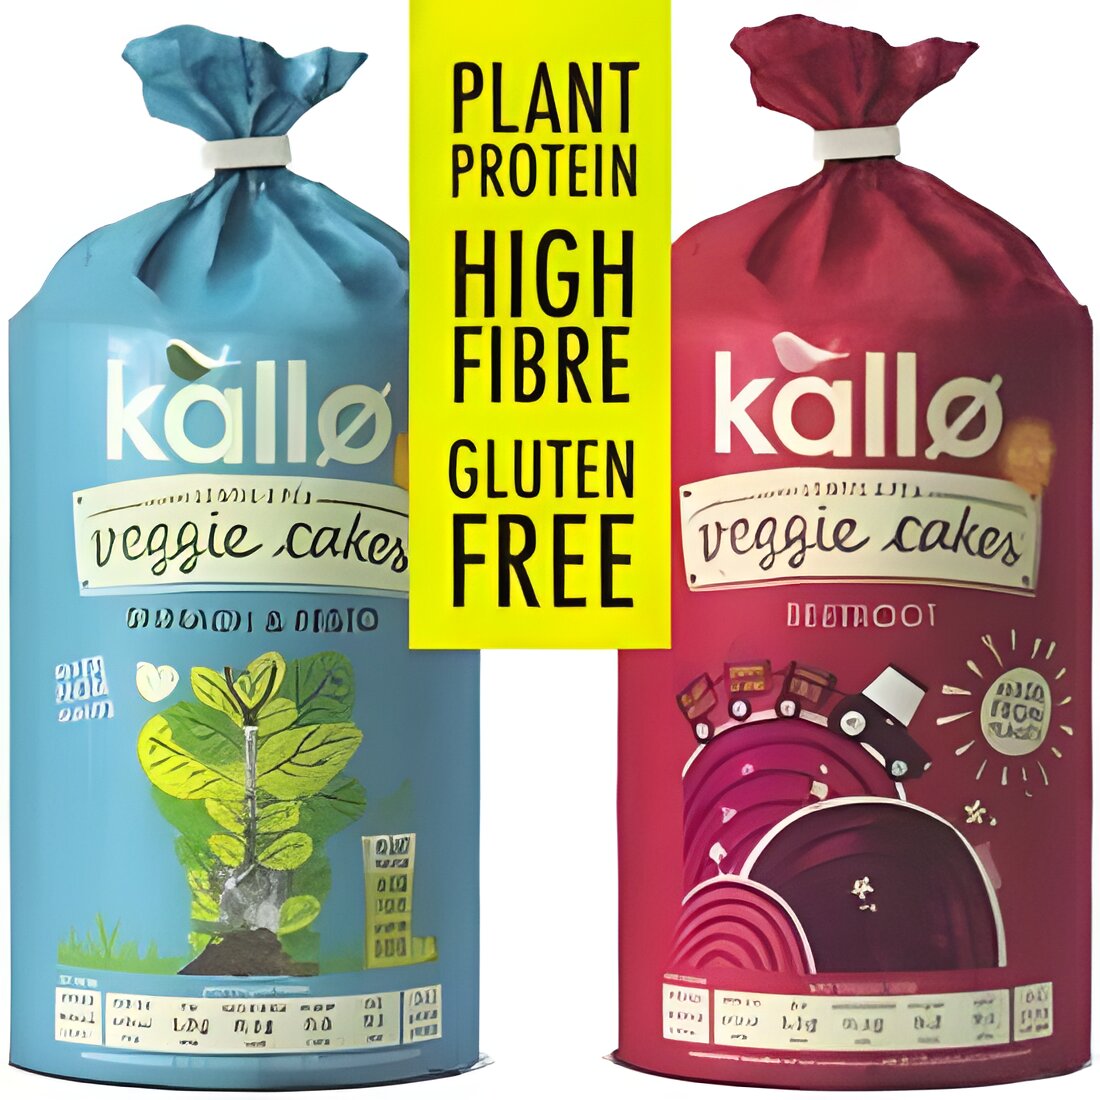 Free Kallo Veggie Cake Samples